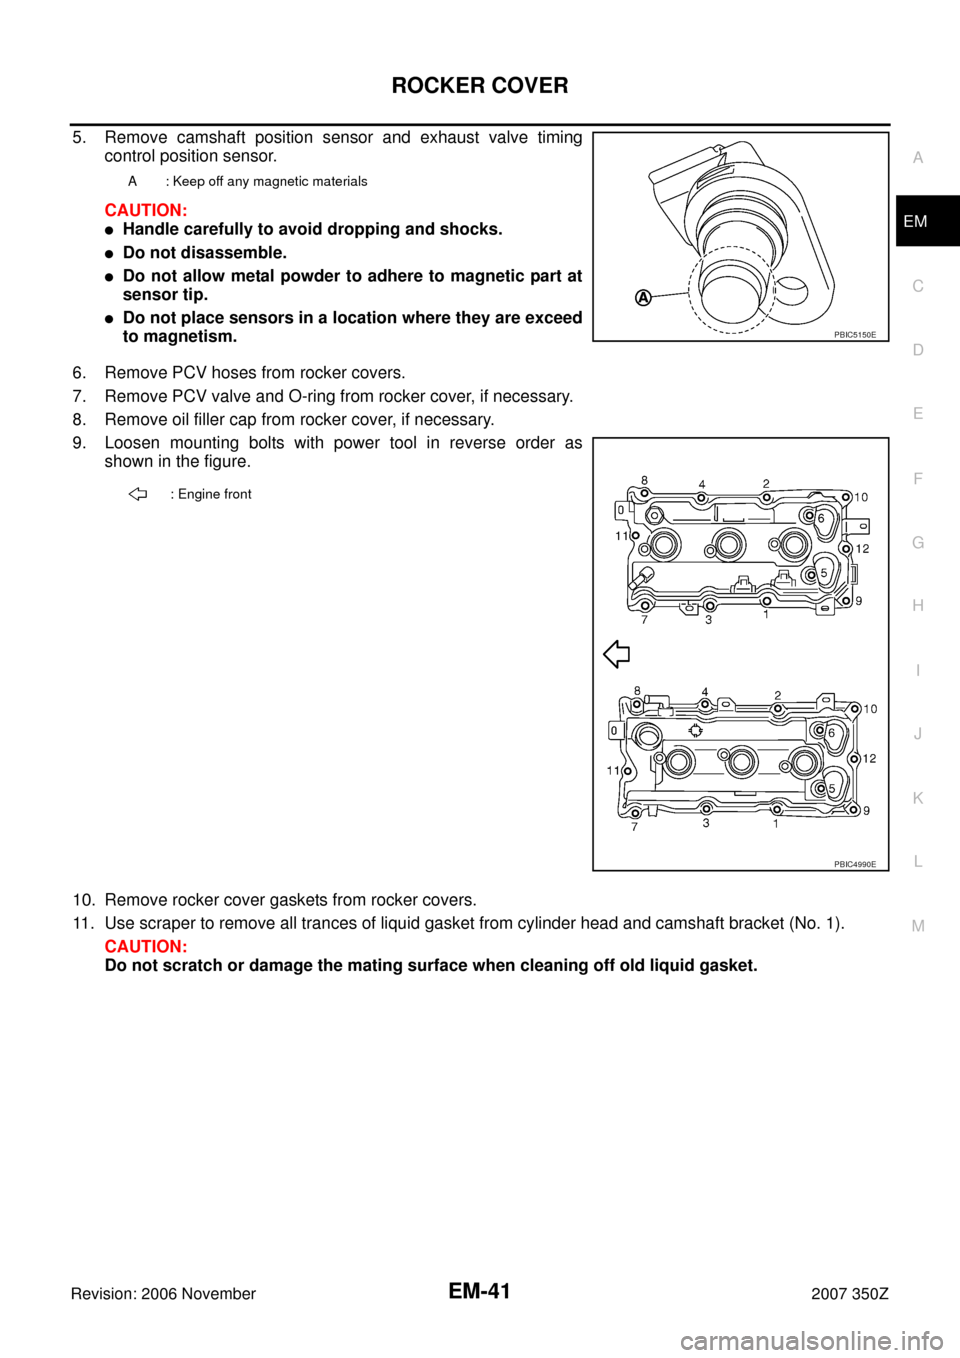 NISSAN 350Z 2007 Z33 Engine Mechanical Service Manual ROCKER COVER
EM-41
C
D
E
F
G
H
I
J
K
L
MA
EM
Revision: 2006 November2007 350Z
5. Remove camshaft position sensor and exhaust valve timing
control position sensor.
CAUTION:
Handle carefully to avoid d